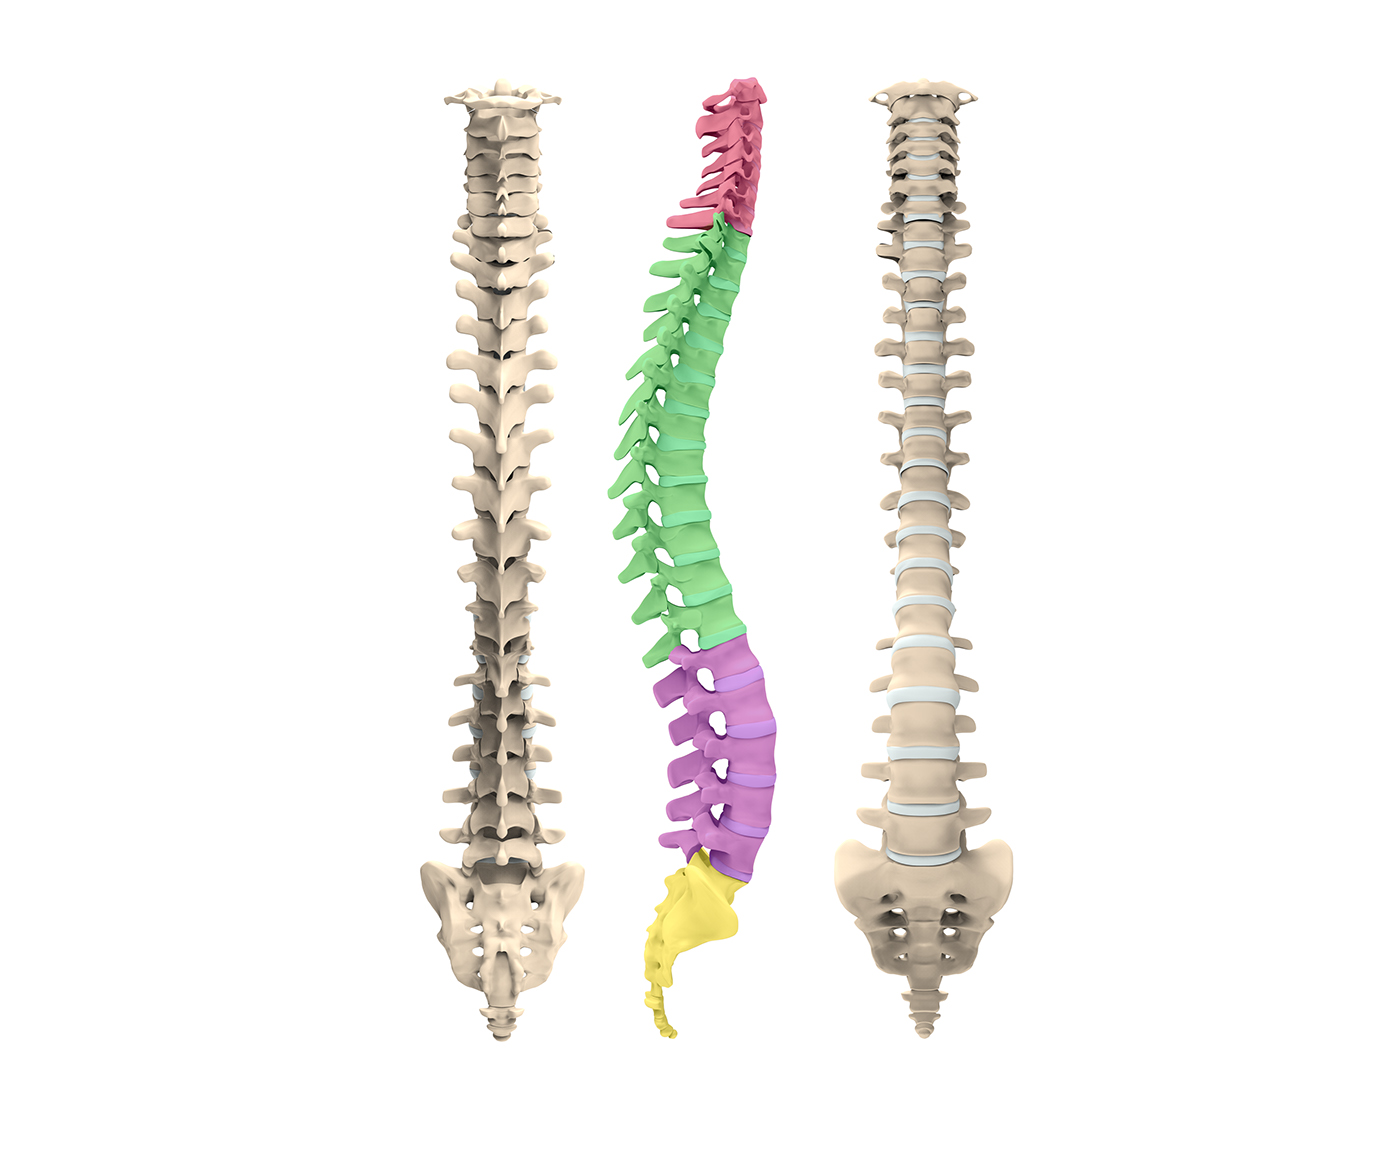 spine cervical thoracic lumbar sacrum anatomy bones